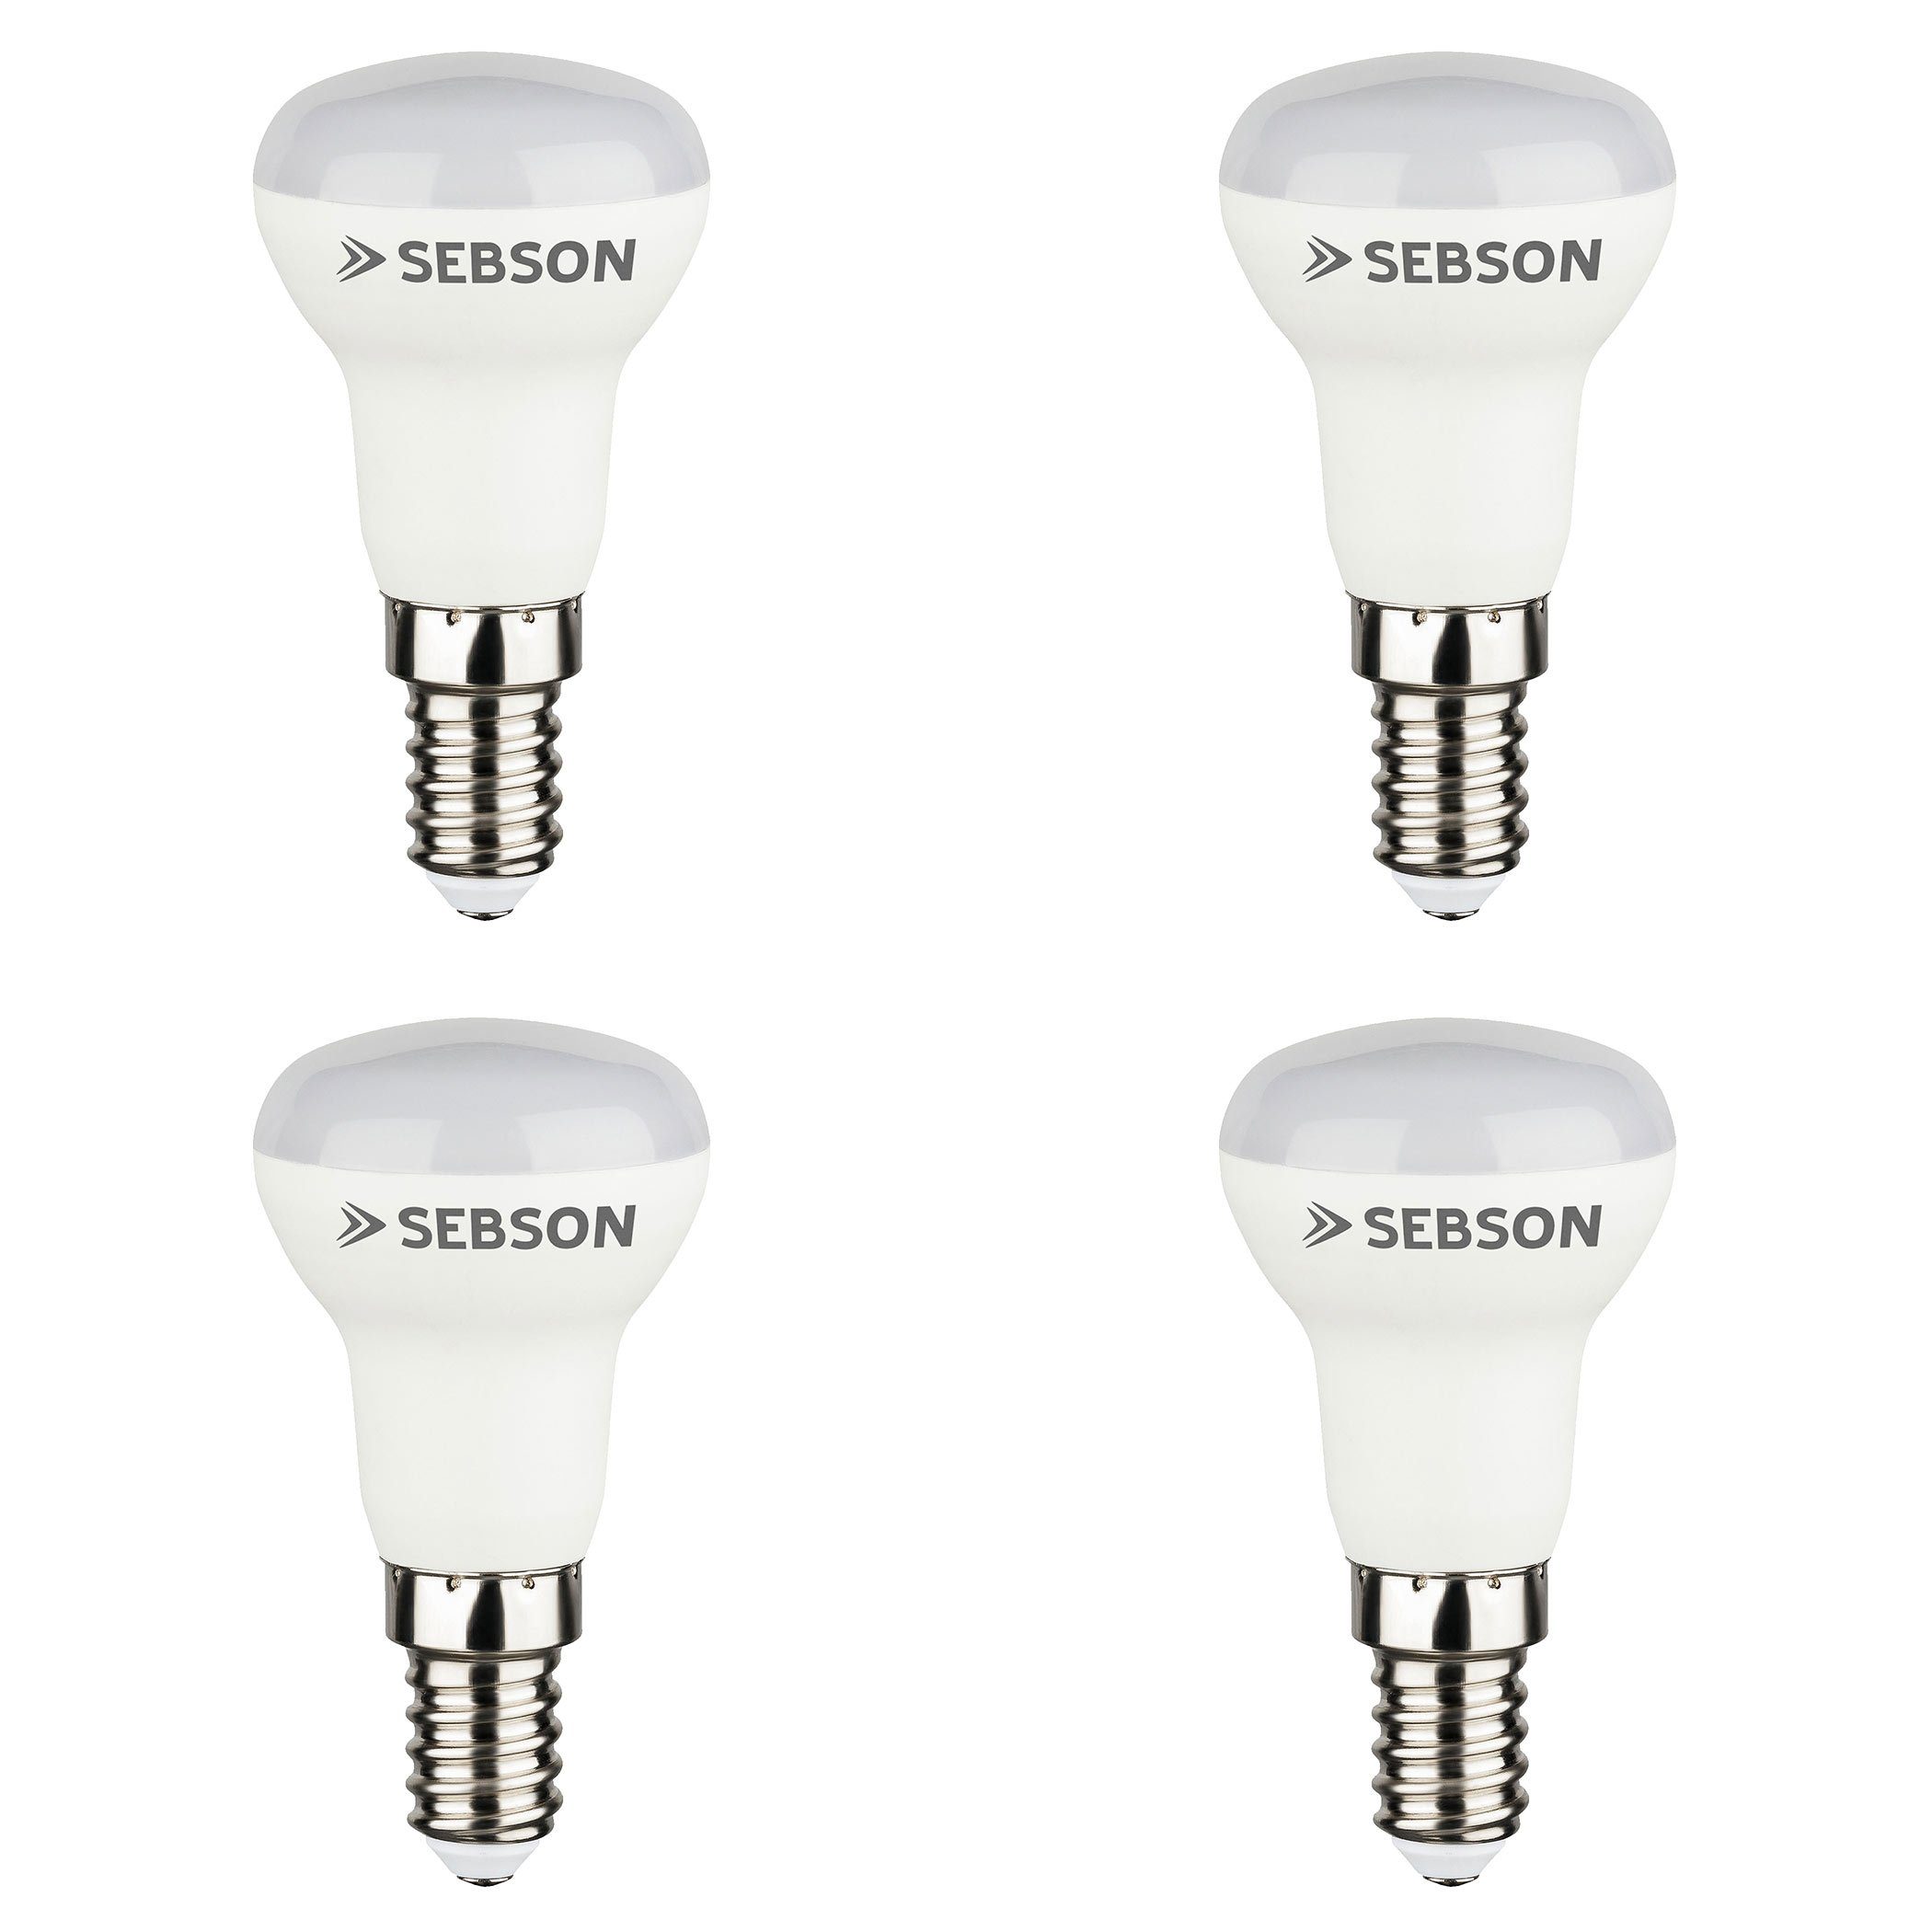 SEBSON »LED Lampe E14 R39 Reflektor 3W warmweiß 3000k 200lm, Ra97, 230V LED  Leuchtmittel flimmerfrei, E14 R39 Reflektorlampe, 4er Pack« LED-Leuchtmittel